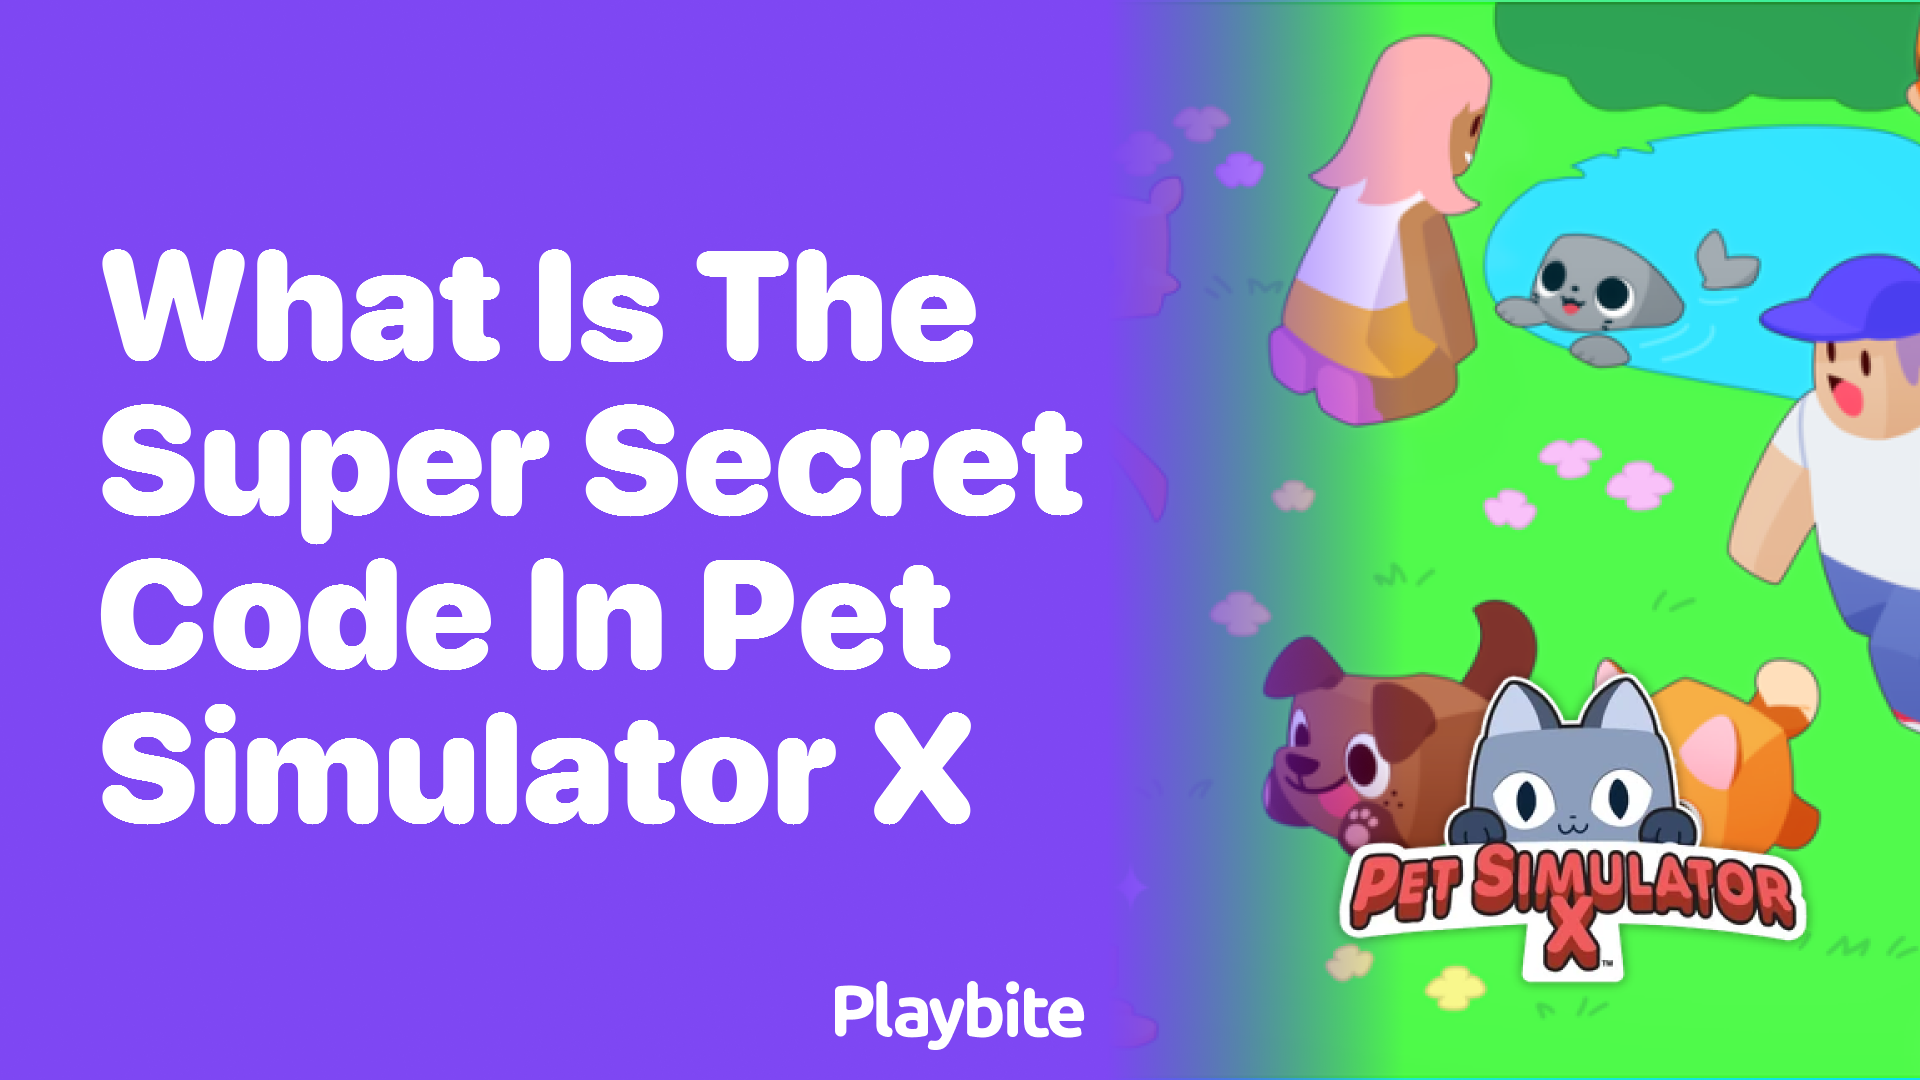 What is the Super Secret Code in Pet Simulator X?